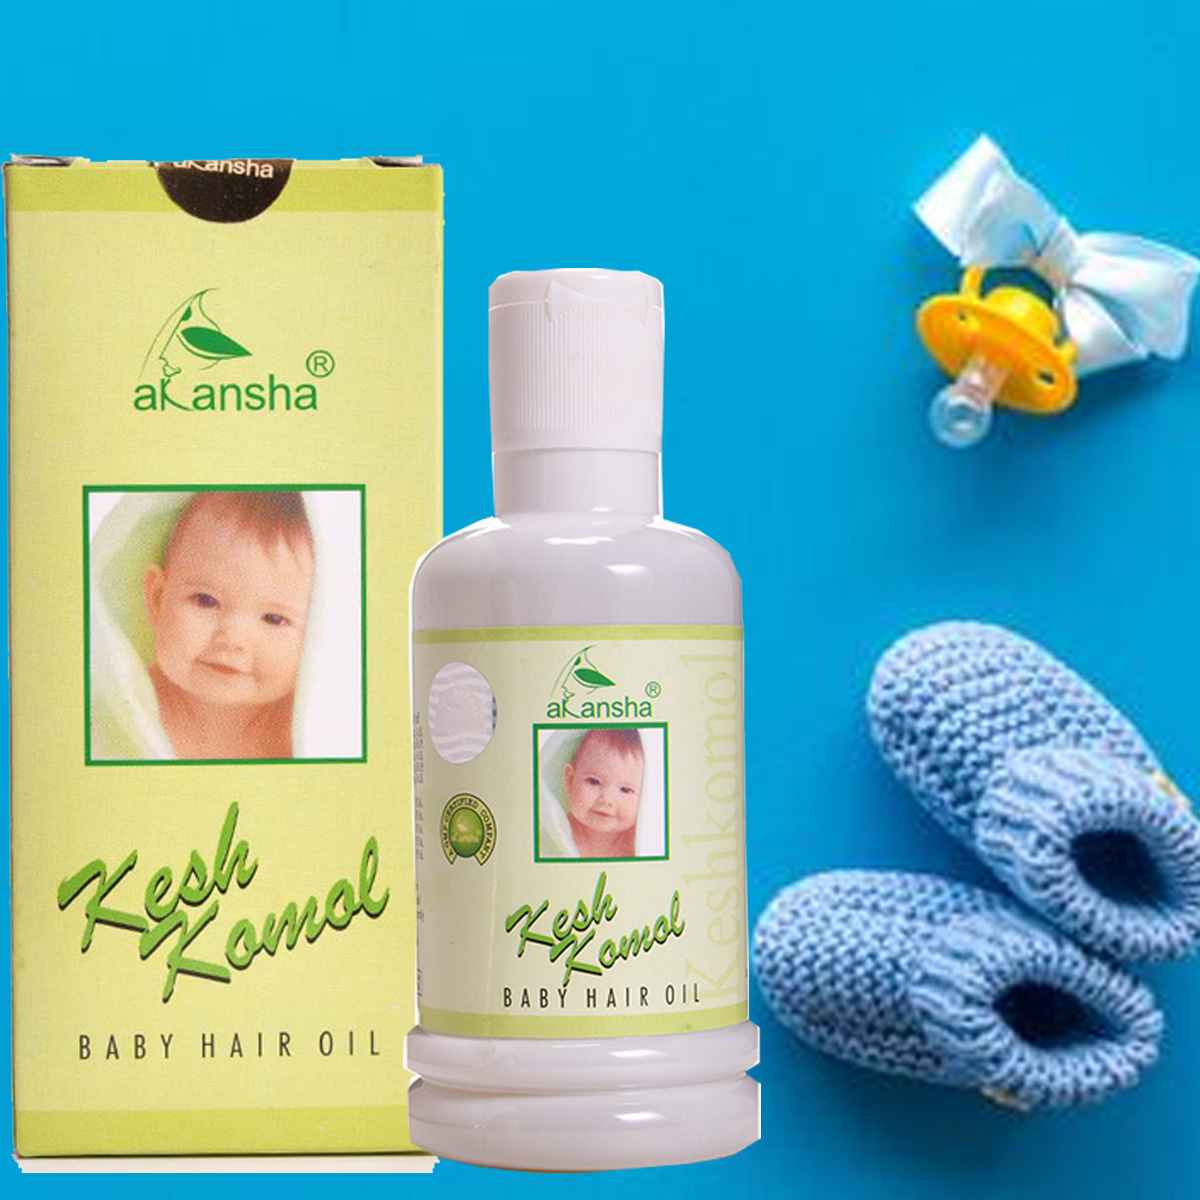 Akansha Products – Available Baby Hair Oil